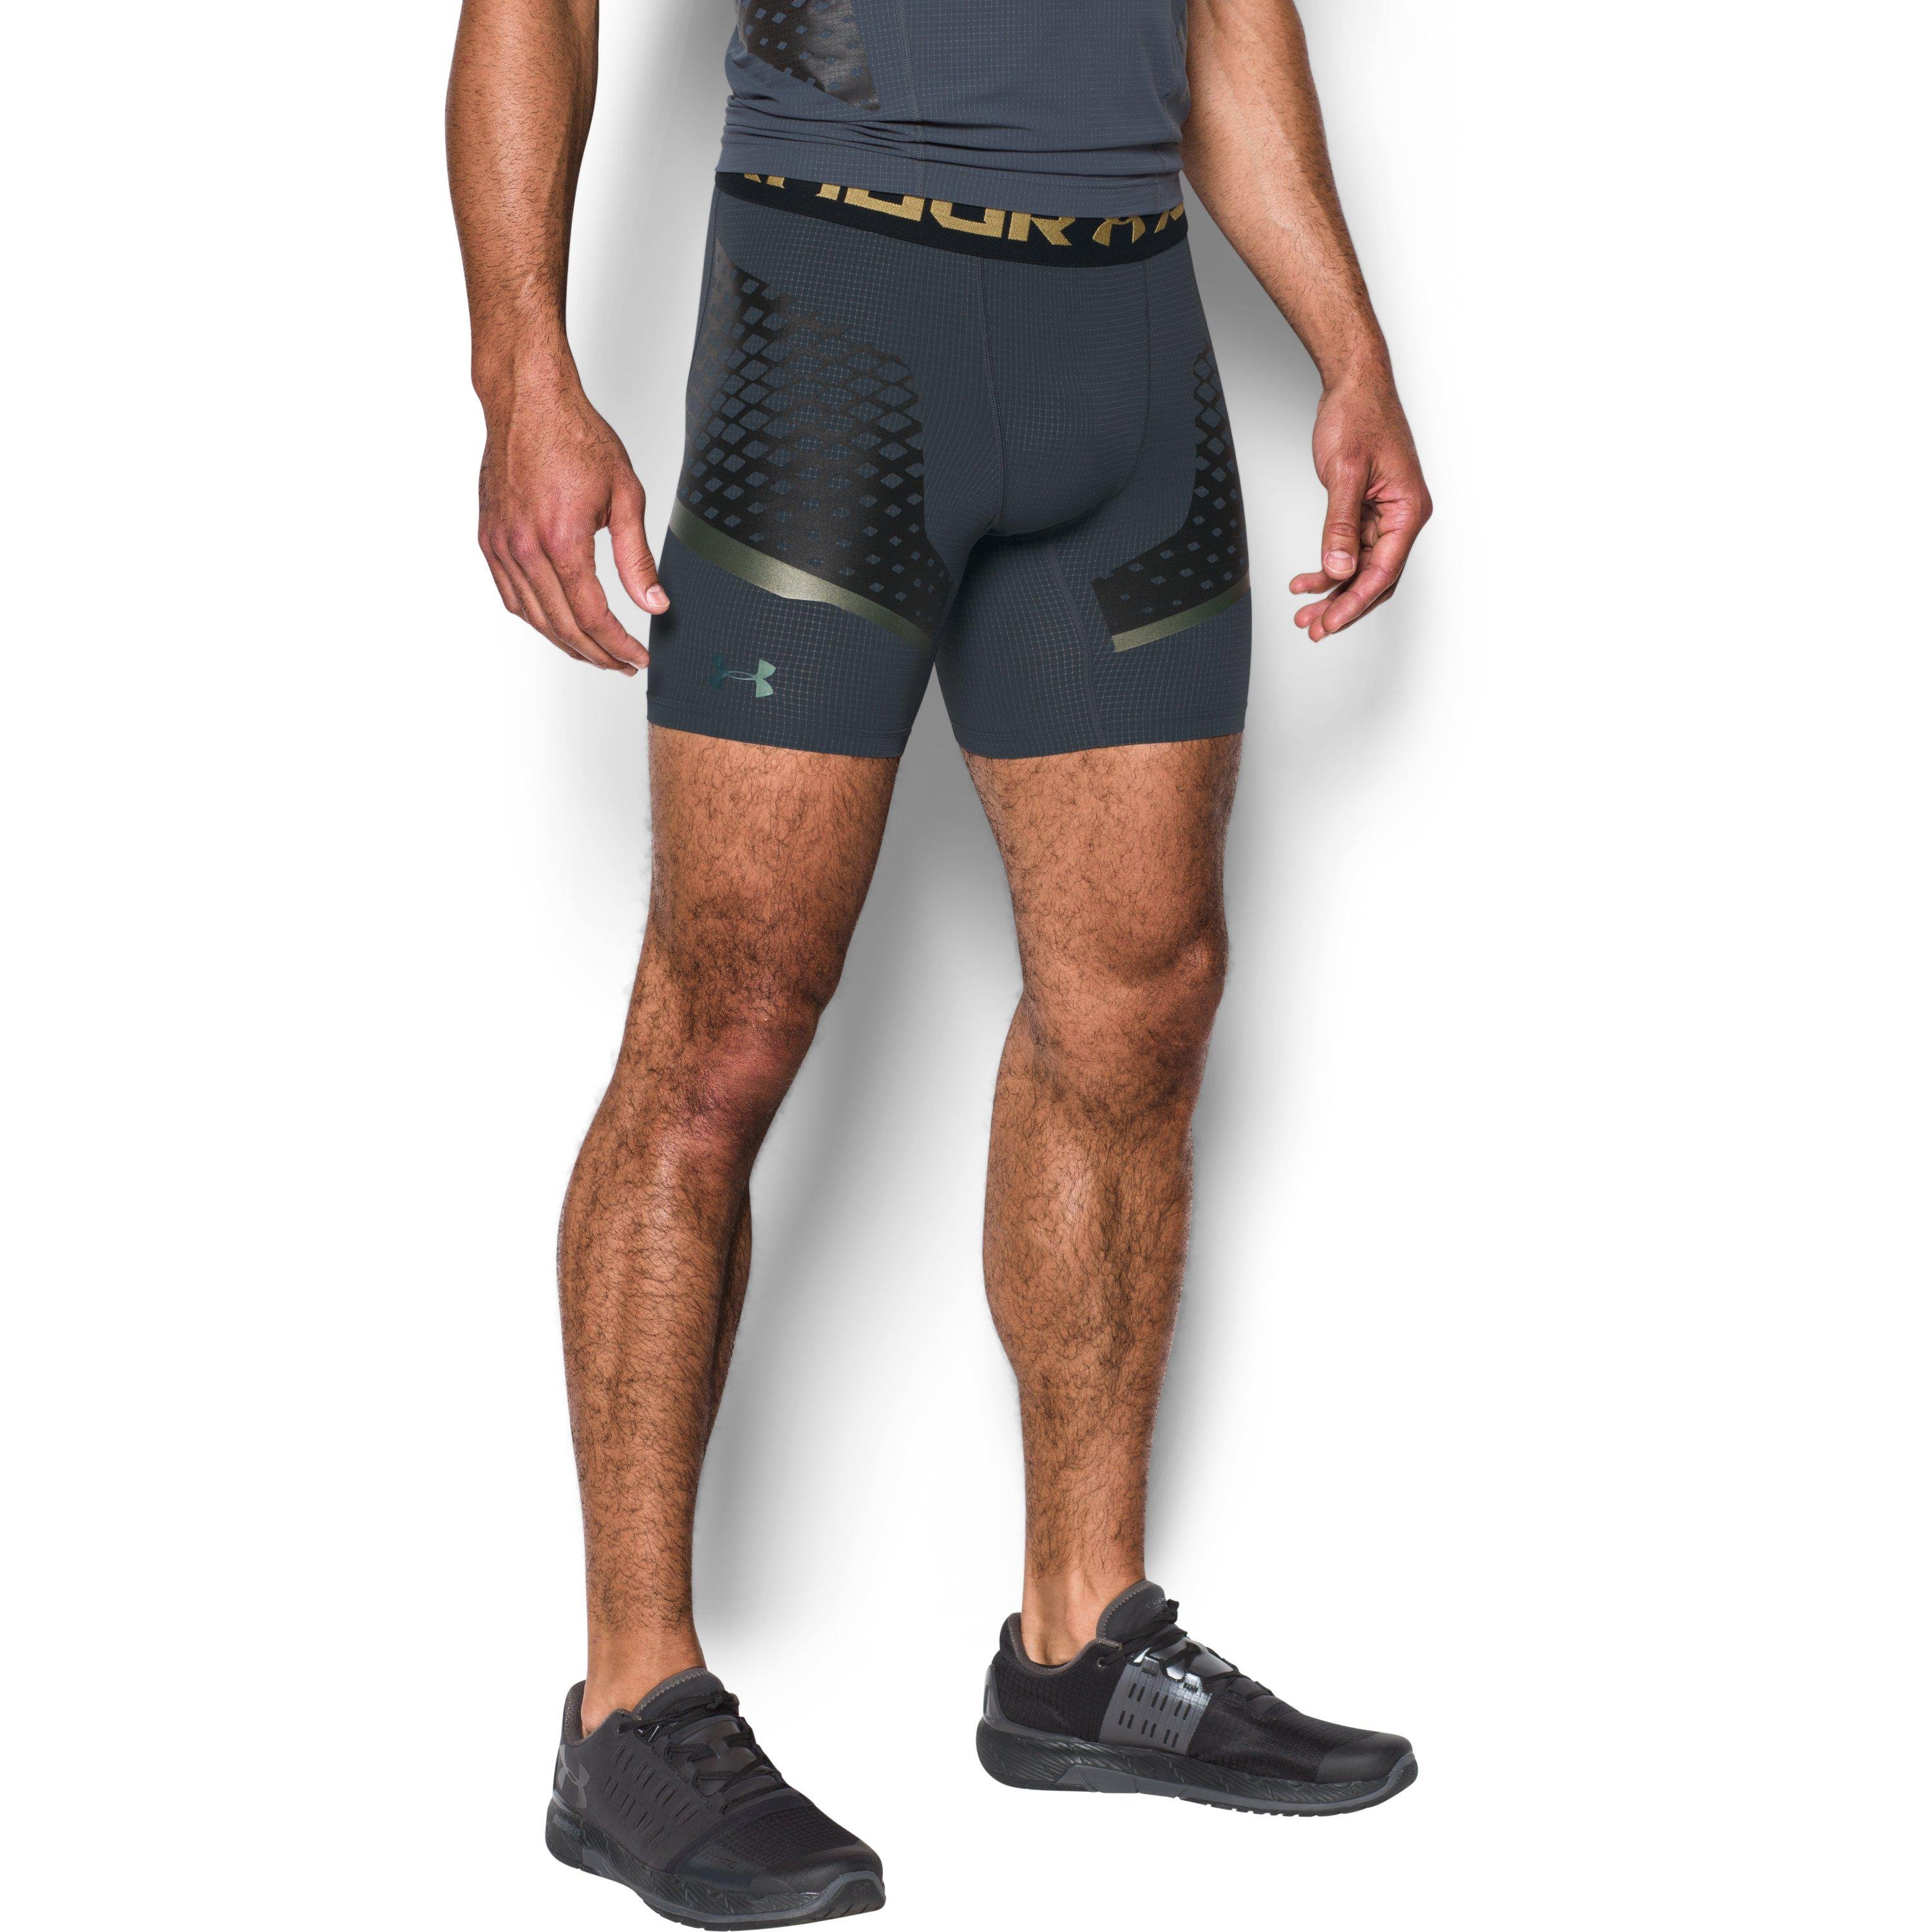 Under Armour Men's Heatgear® Armour Zone Compression Shorts for Men